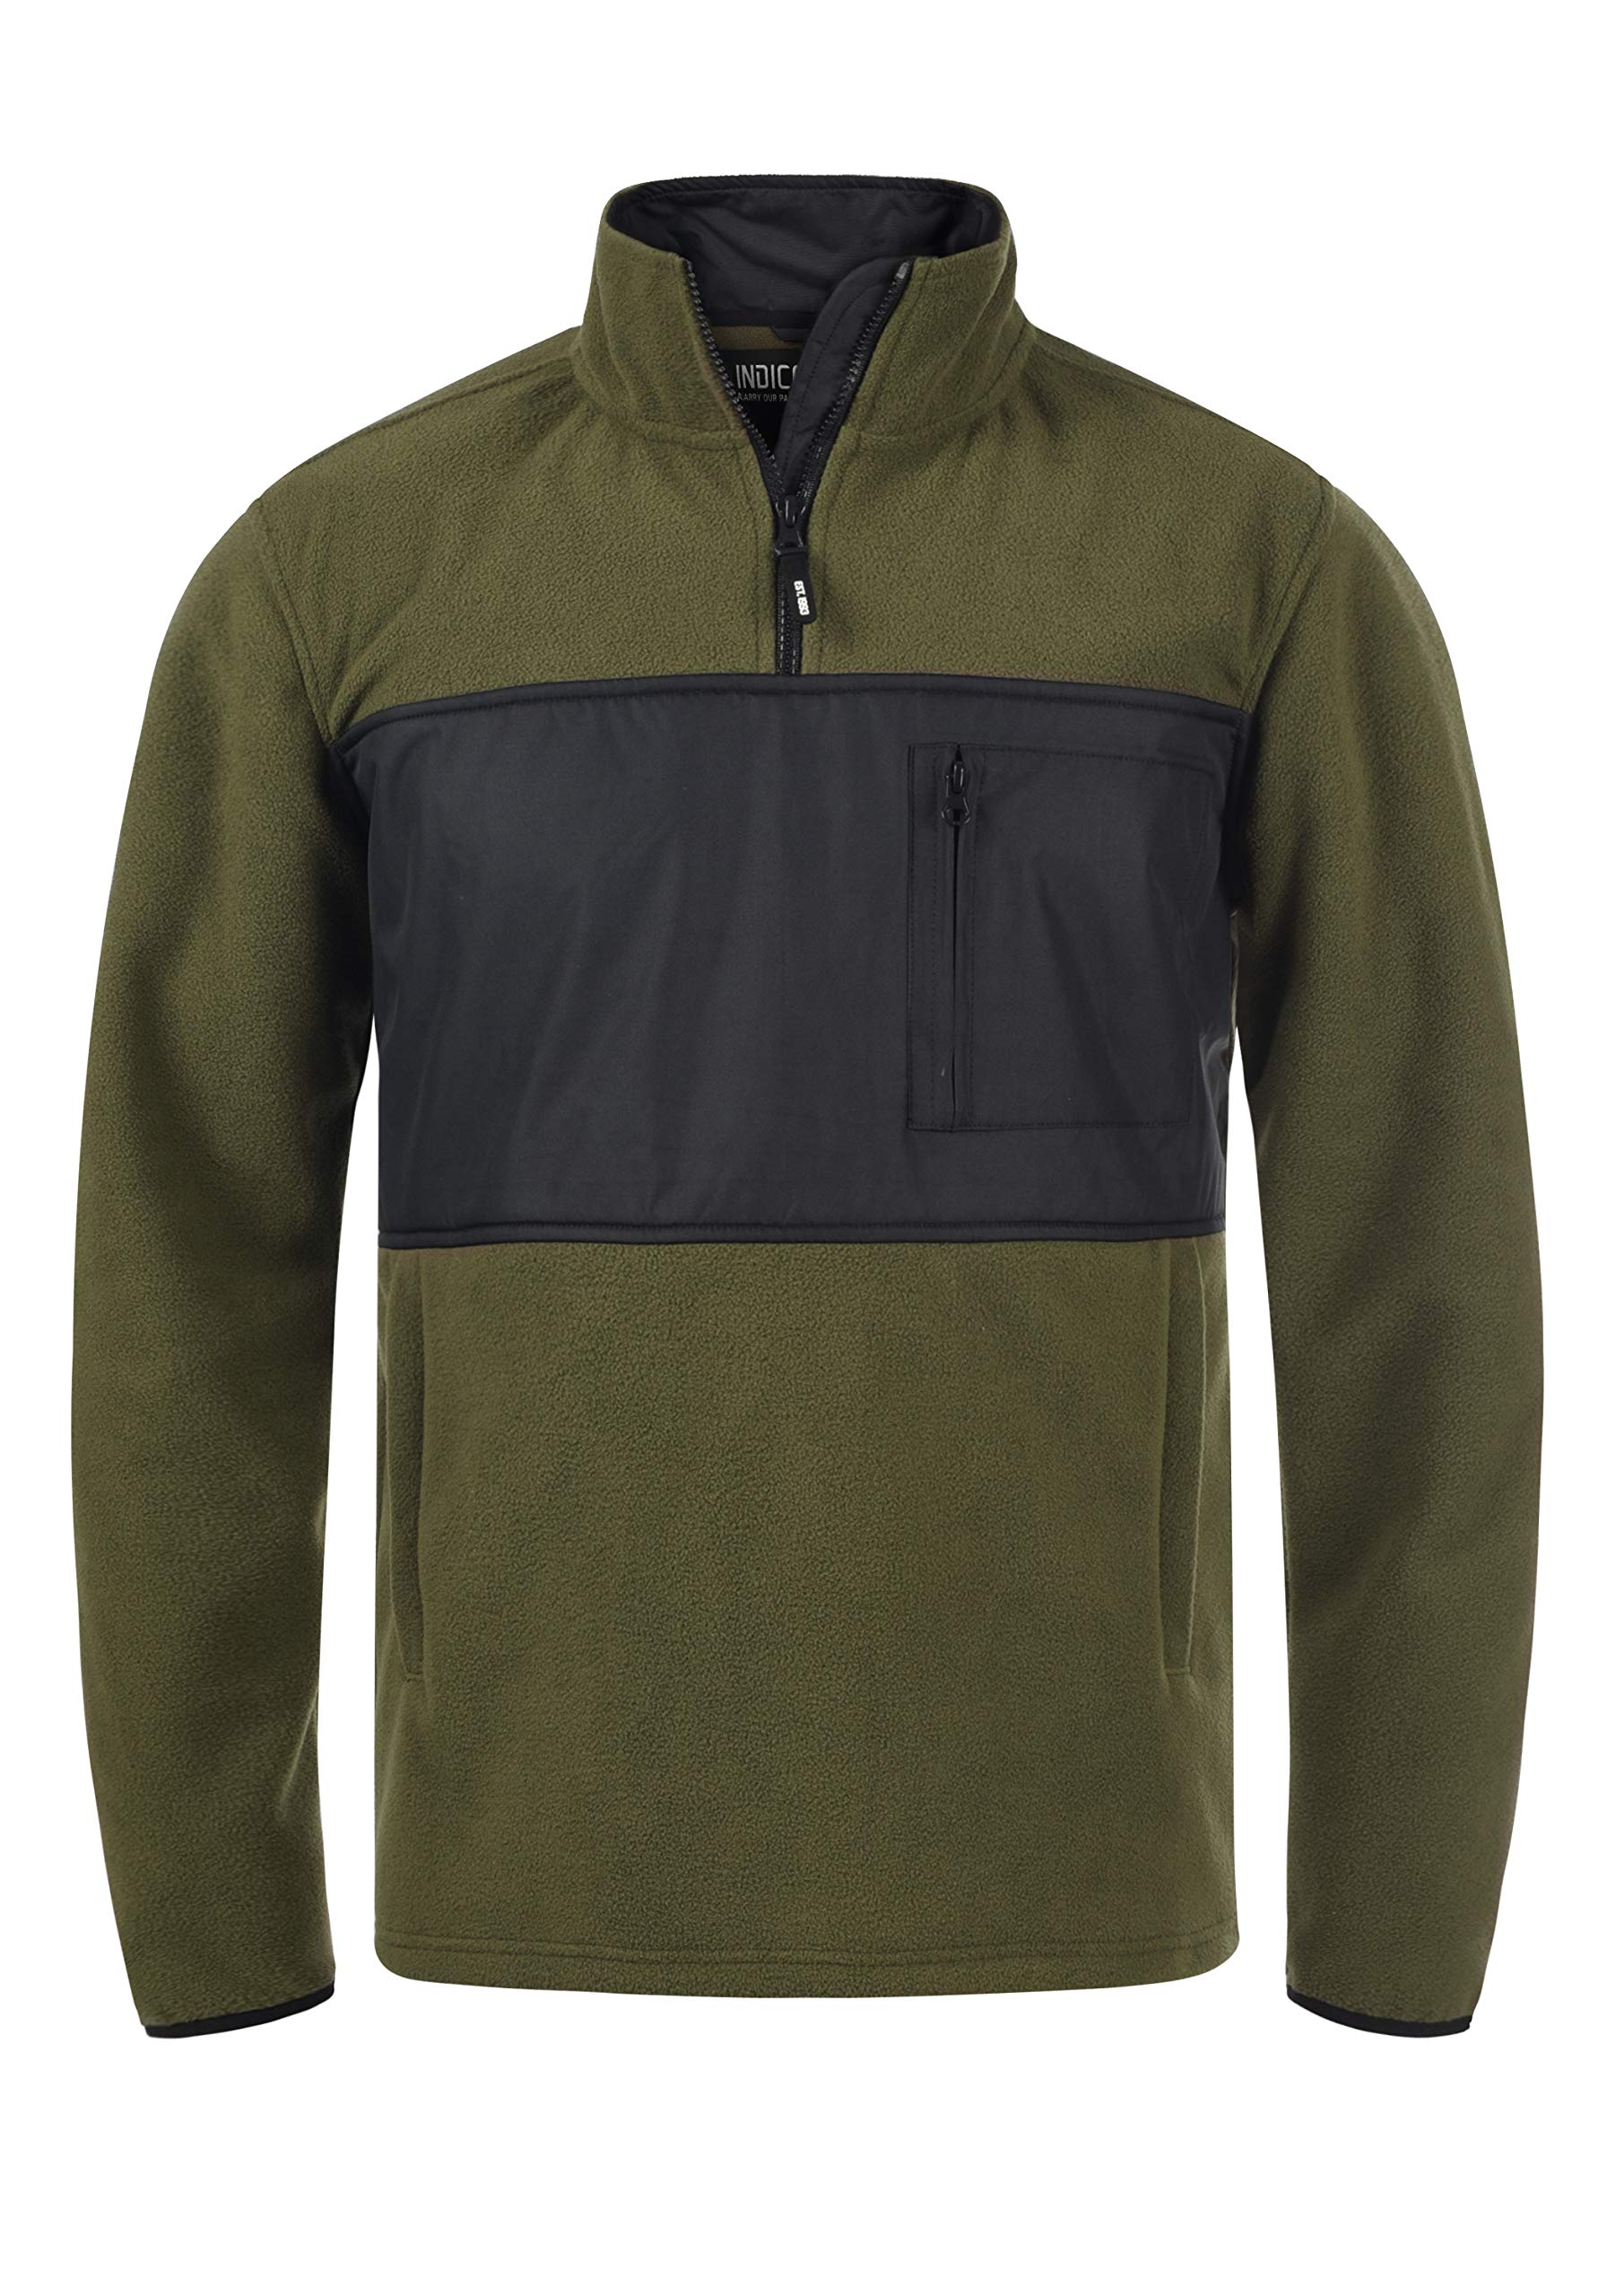 Indicode Boggy Herren Fleecejacke Sweatjacke Jacke mit Stehkragen, Größe:L, Farbe:Army (600)